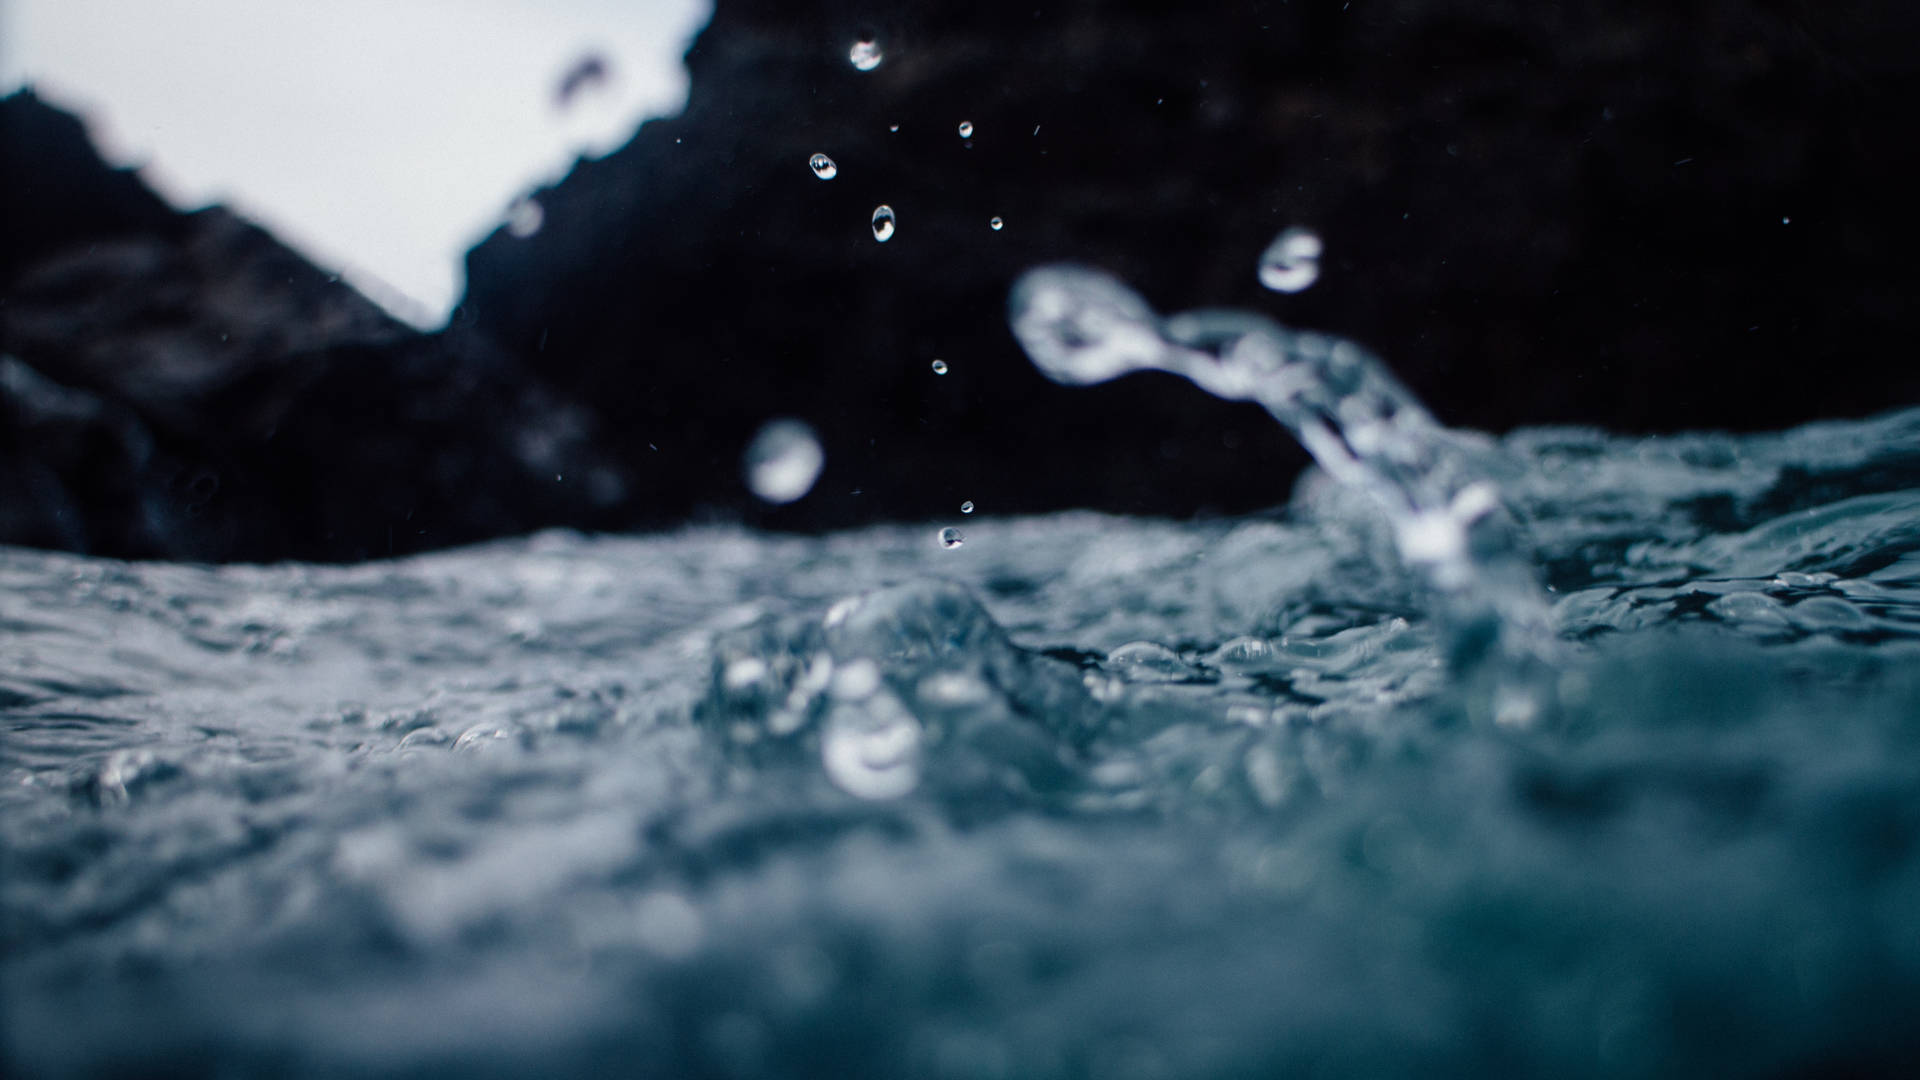 Ocean Water Droplets Background